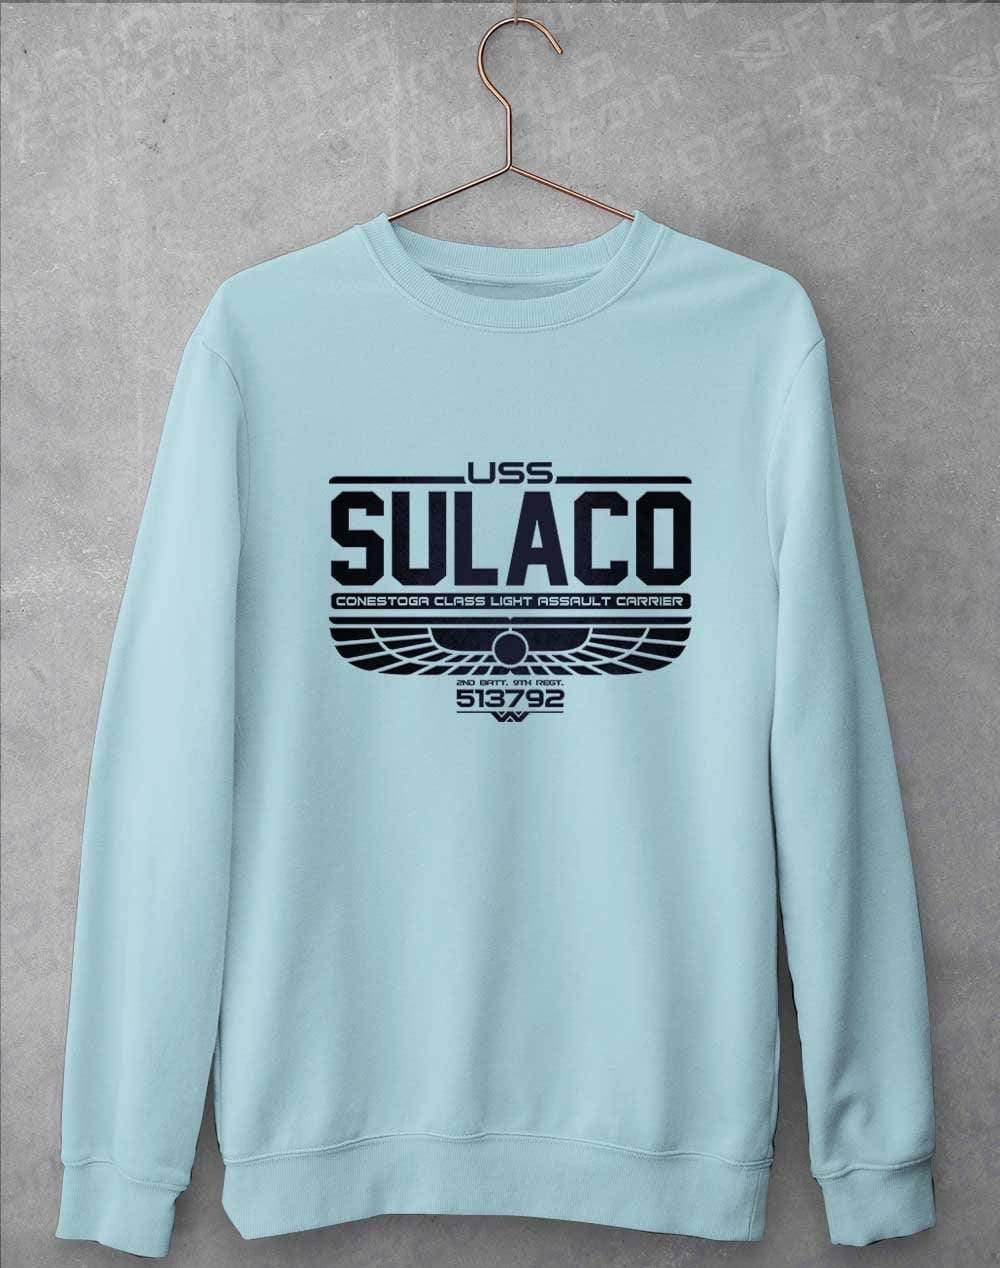 USS Sulaco Sweatshirt S / Sky Blue  - Off World Tees